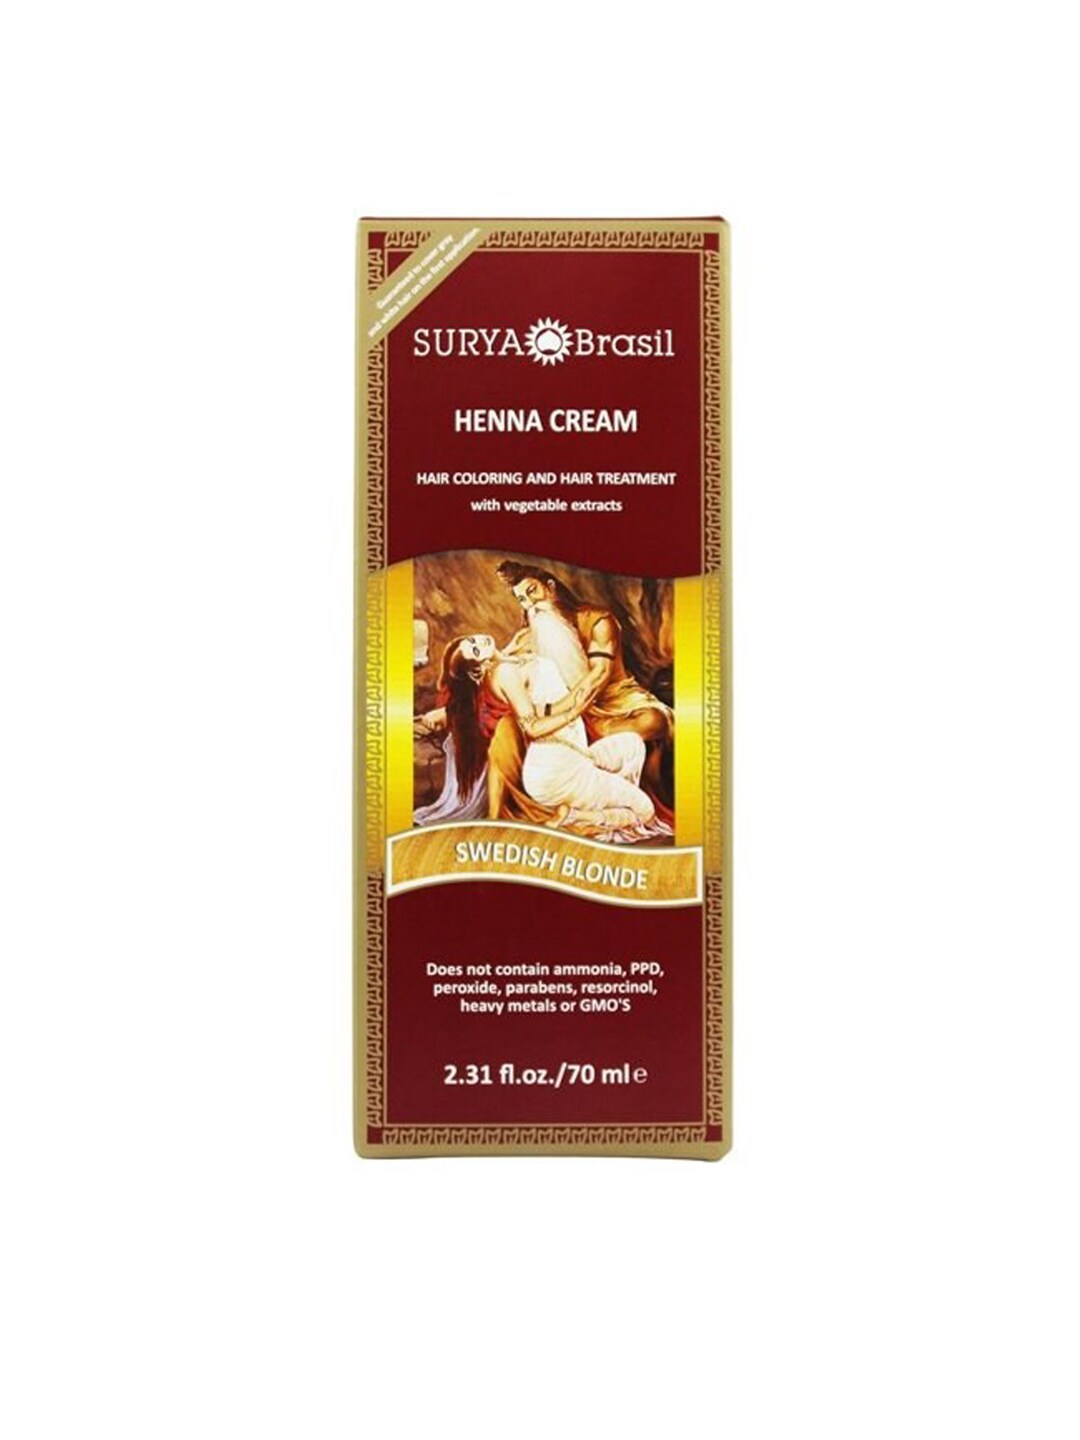 SURYA Brasil Henna Cream Semi-Permanent Hair Color 70ml - Swedish Blonde Price in India